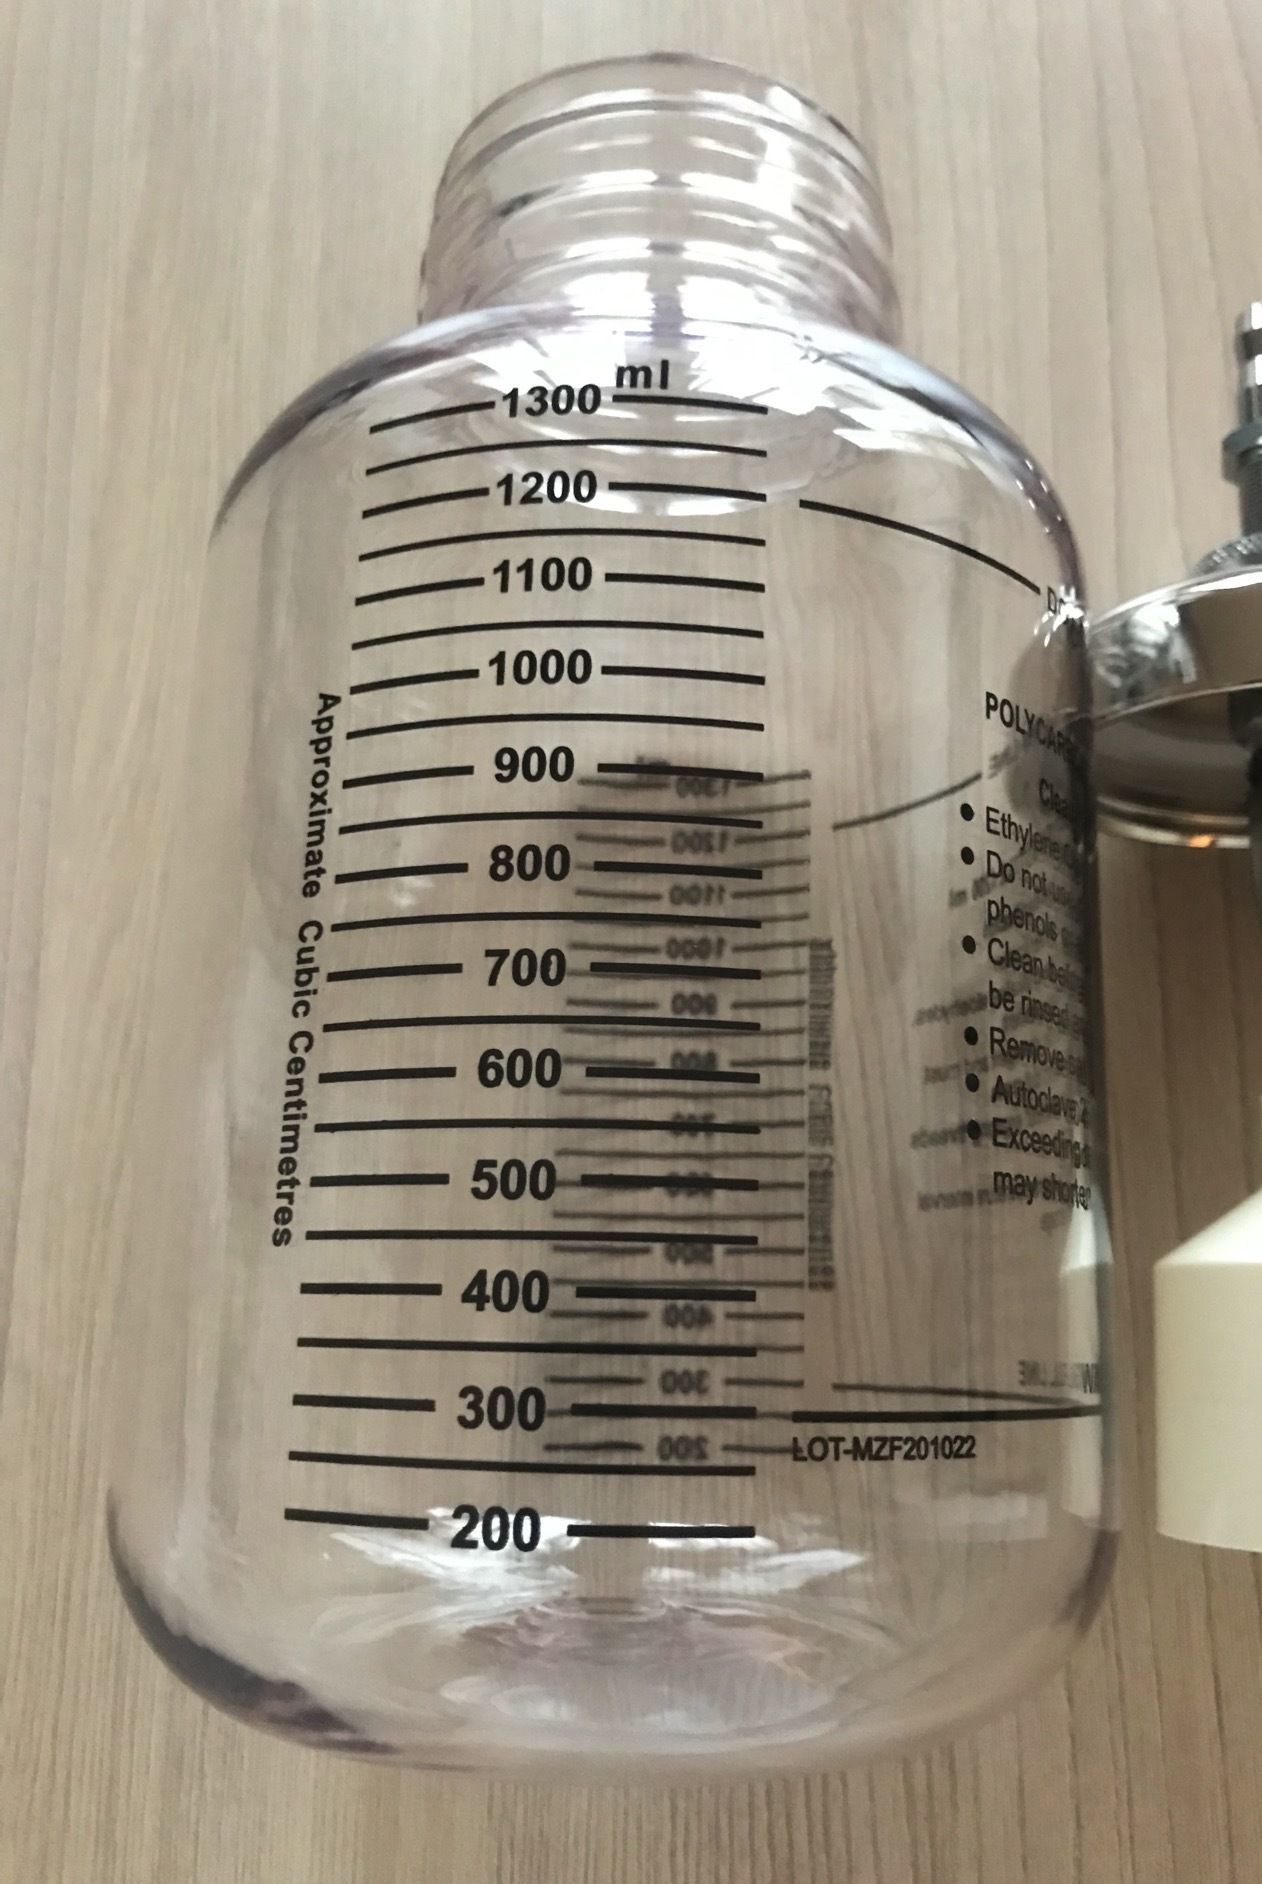 Suction Water Bottle Suction Jar Suction Container Vacuum Regulator Jar 1.5 L_ขวดดูดเสมหะขวดเก็บของเหลวขวดซักซั่น ขนาด 1.5 ลิตร